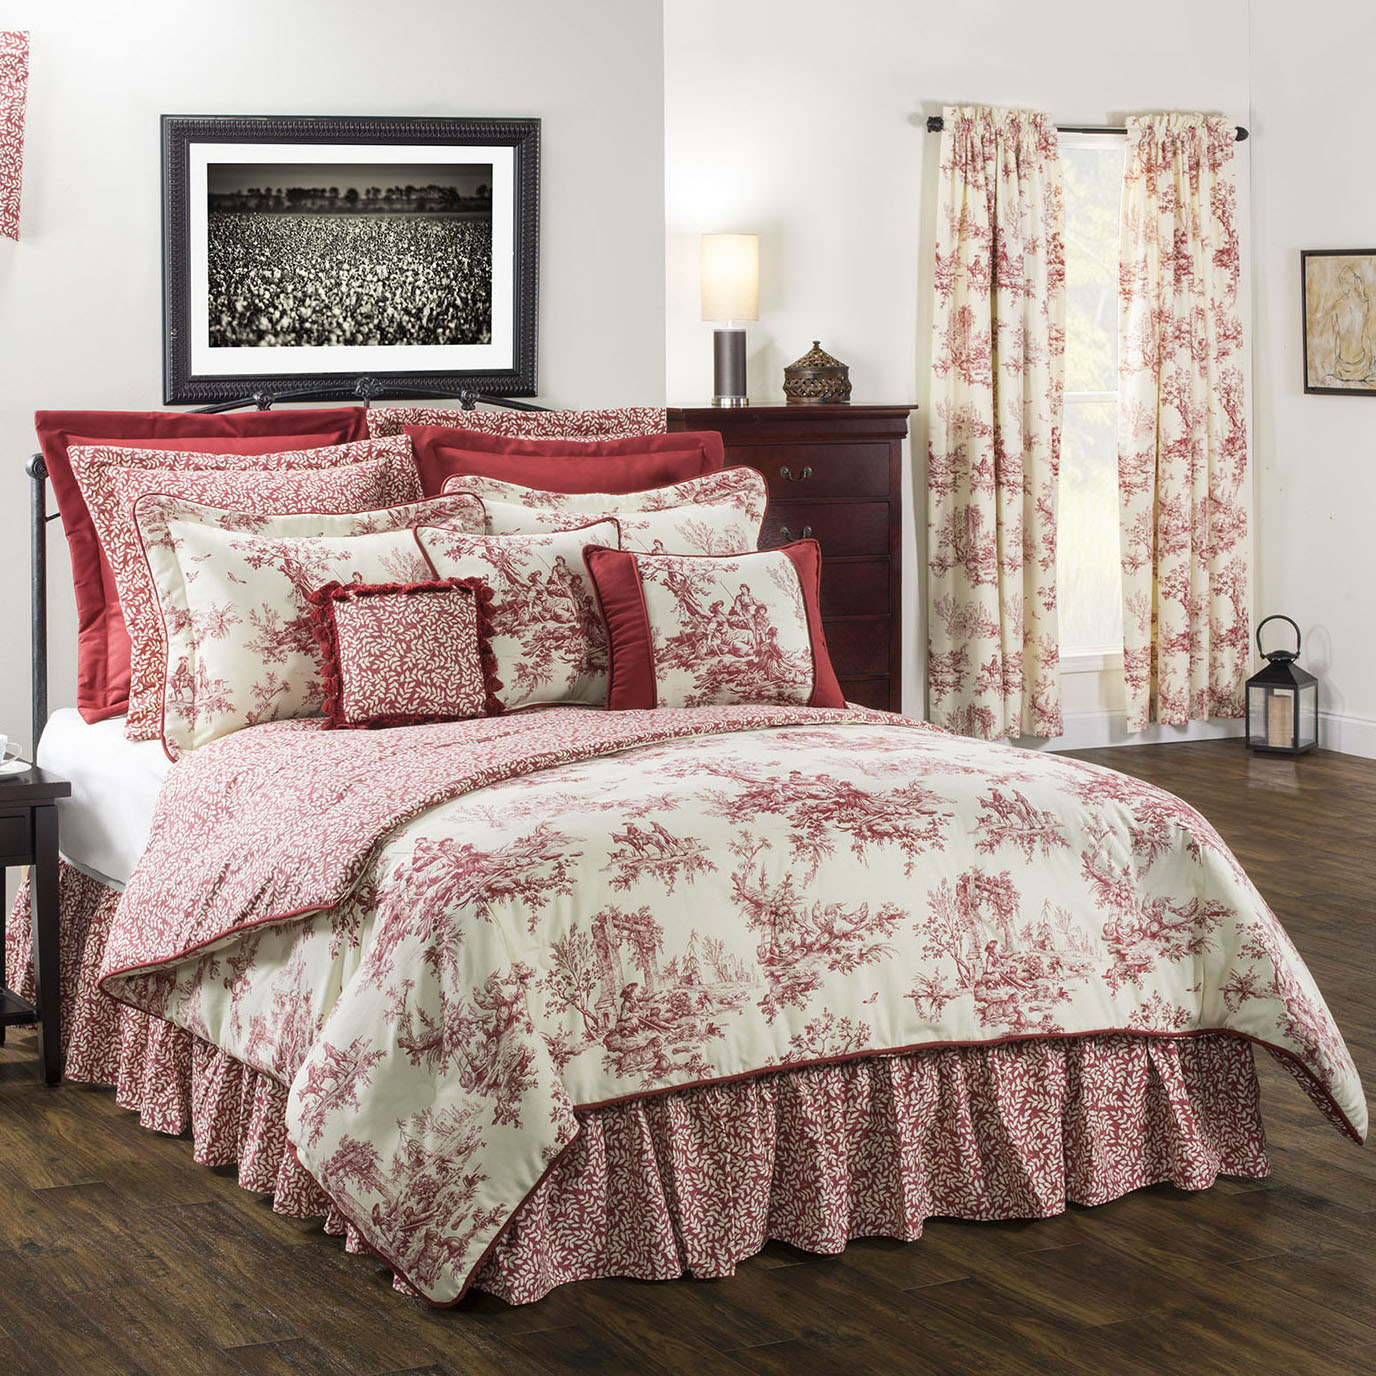 Bouvier Red Queen Comforter Set 18 Drop Bed Skirt By Thomasville